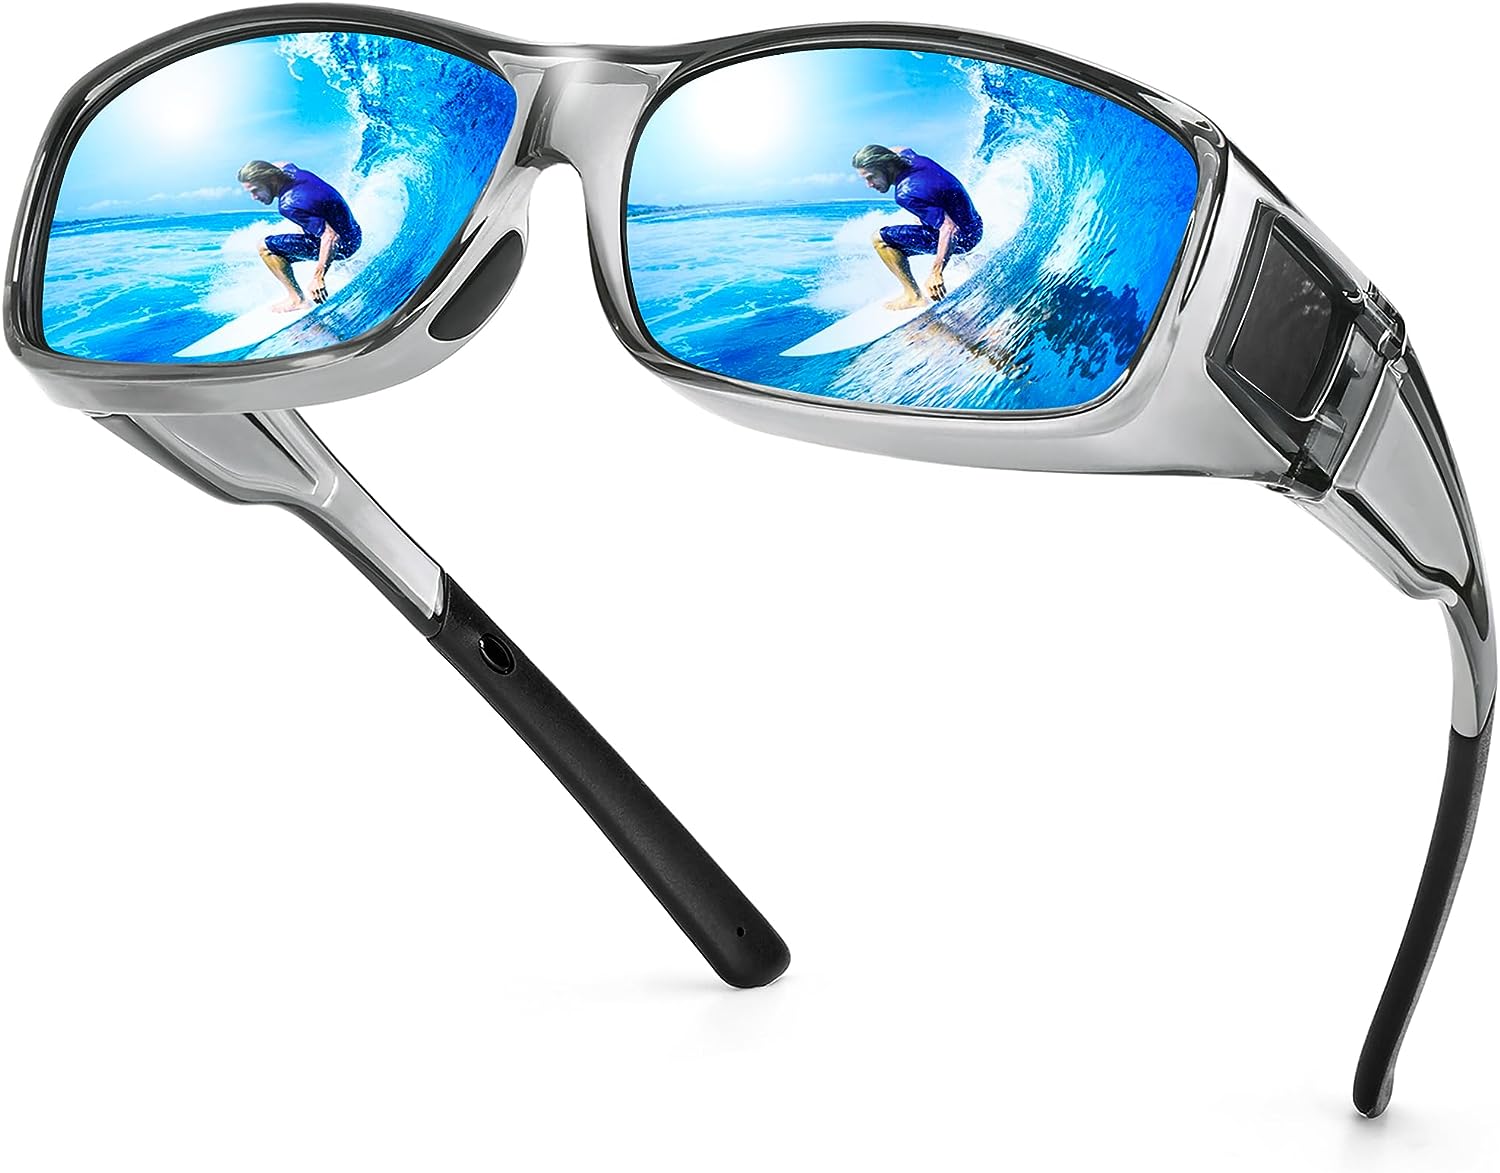 Peekaco Polarized Sunglasses Fit Over Glasses for Men Women, Wrap